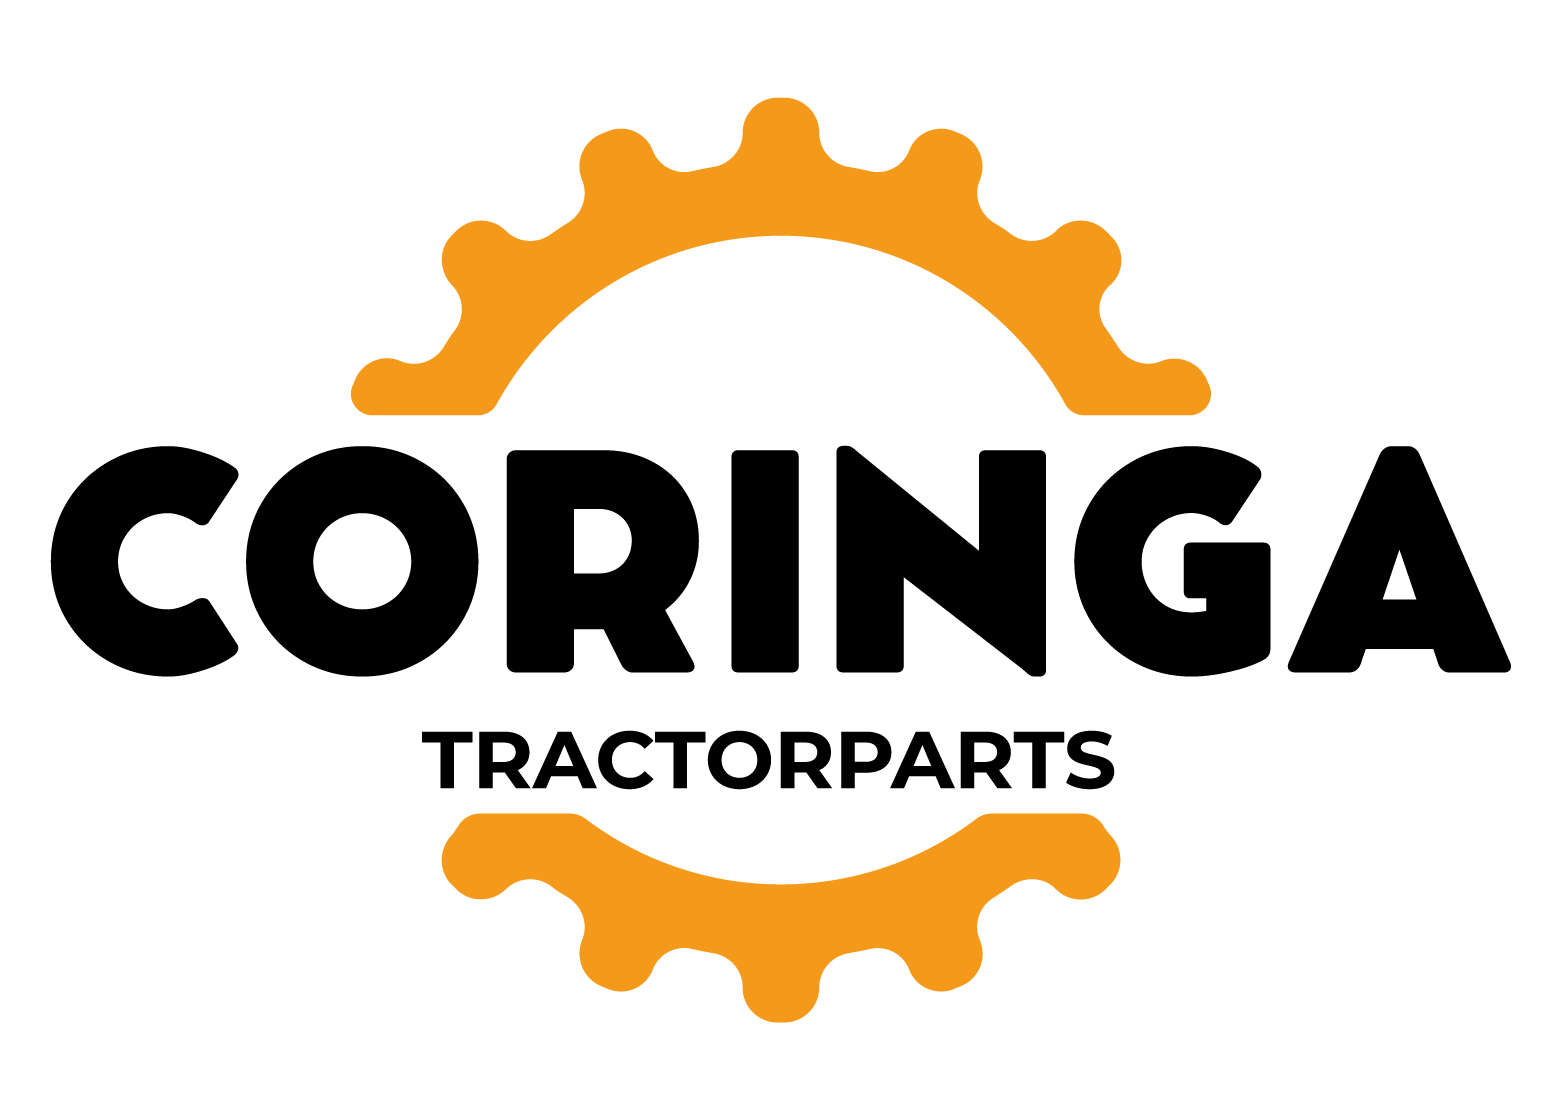 Coringa Tractorparts